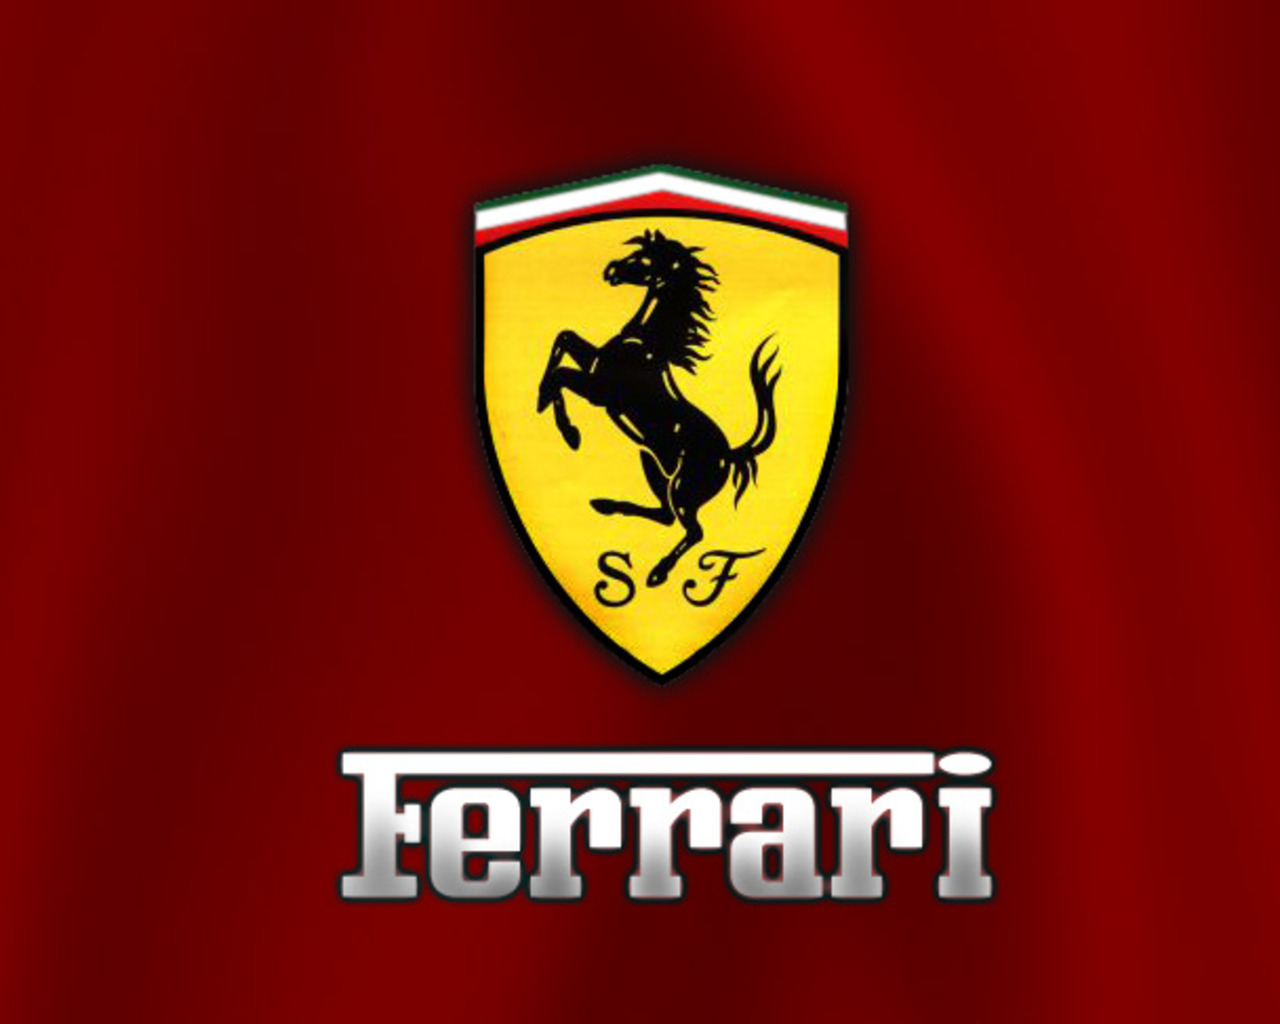 Ferrari Brand Logo Wallpapers 1750 Brand Logo   bwallescom 1280x1024